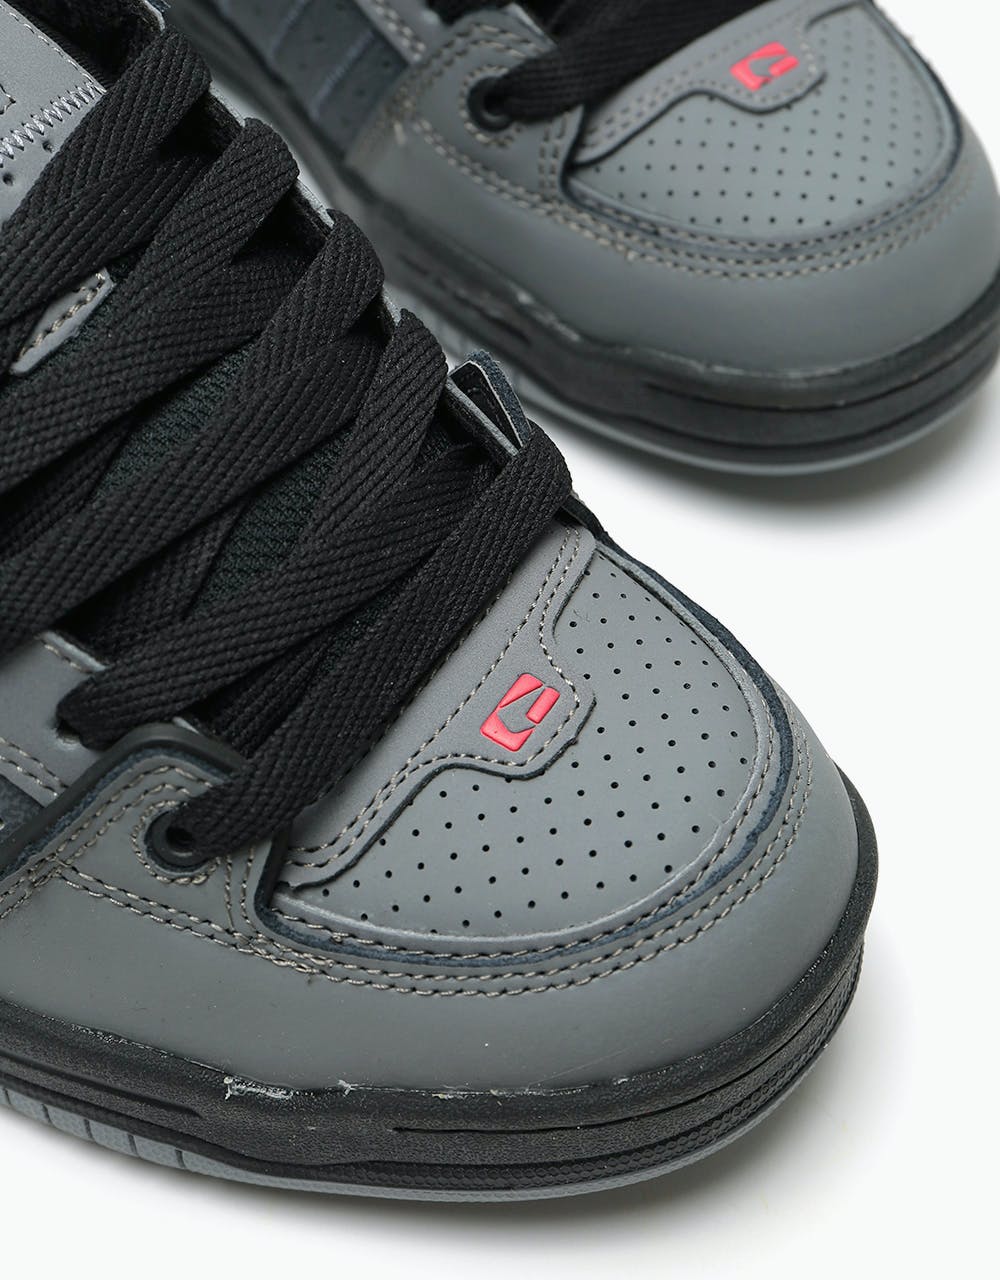 Globe Fusion Skate Shoes - Charcoal/Black/Lava